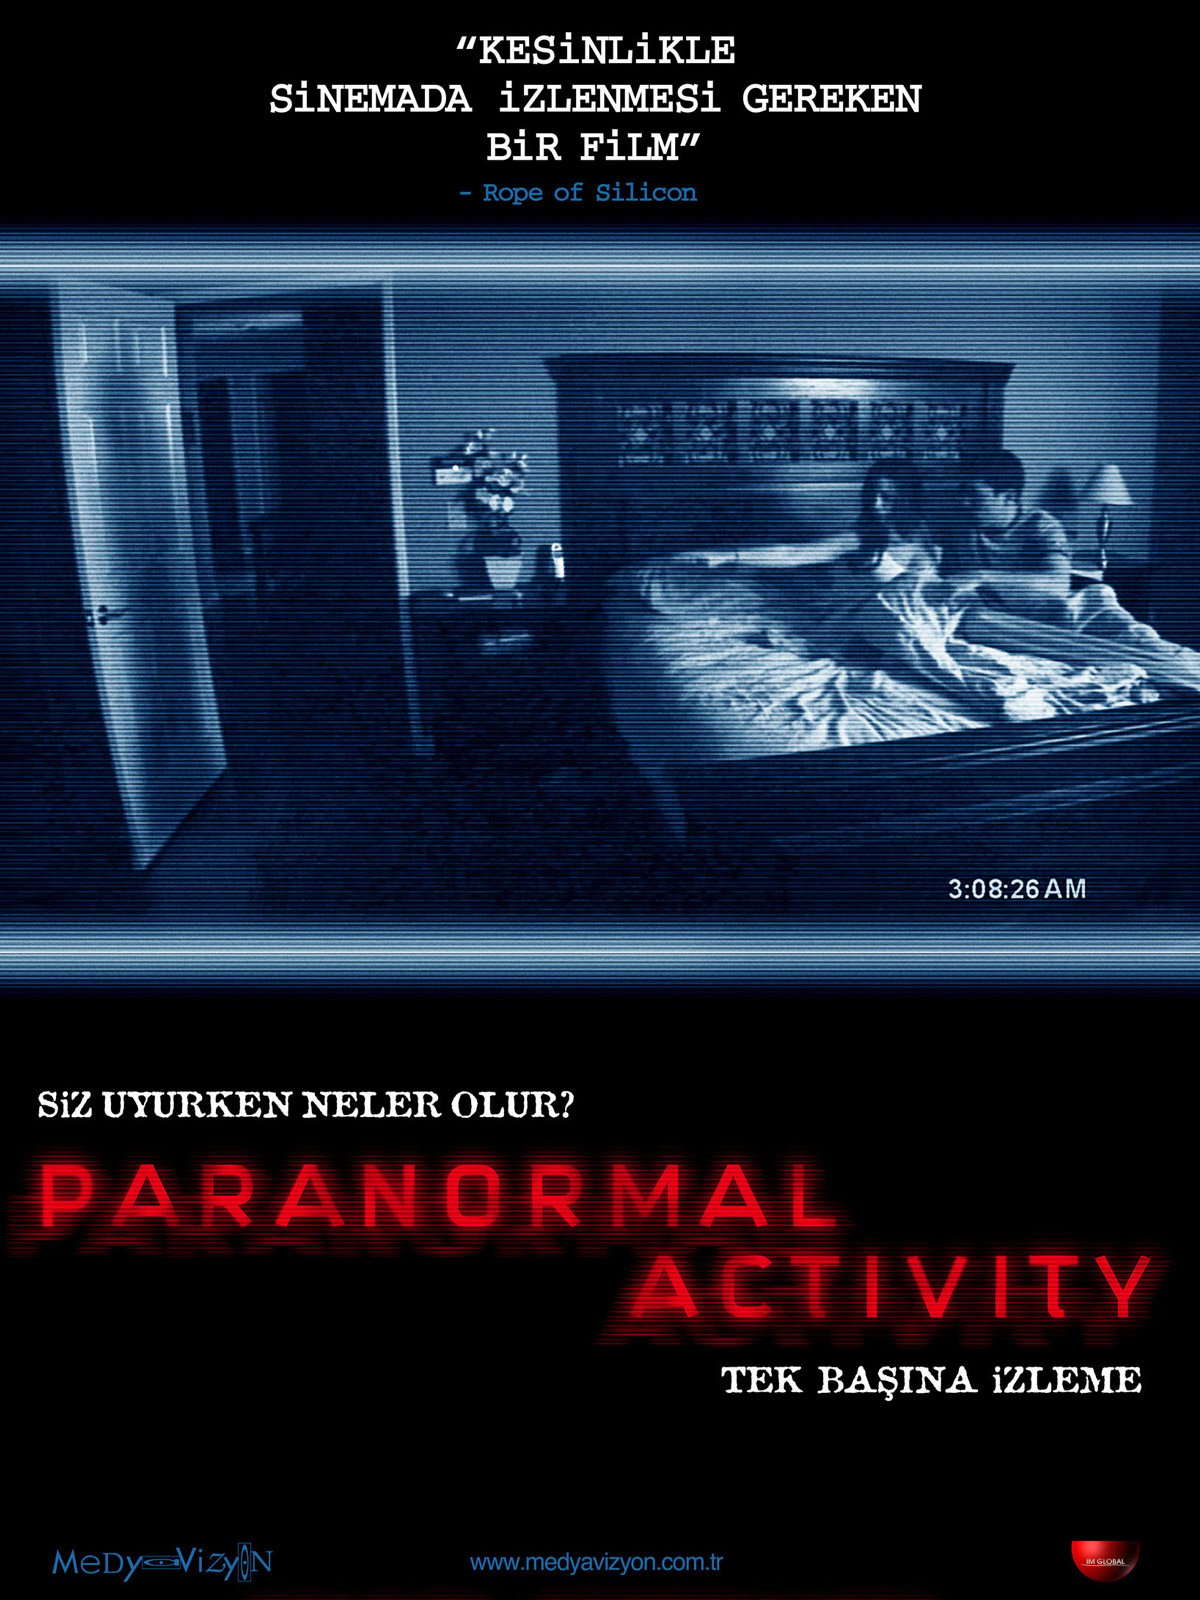 paranormal activity 1 full movie in hindi